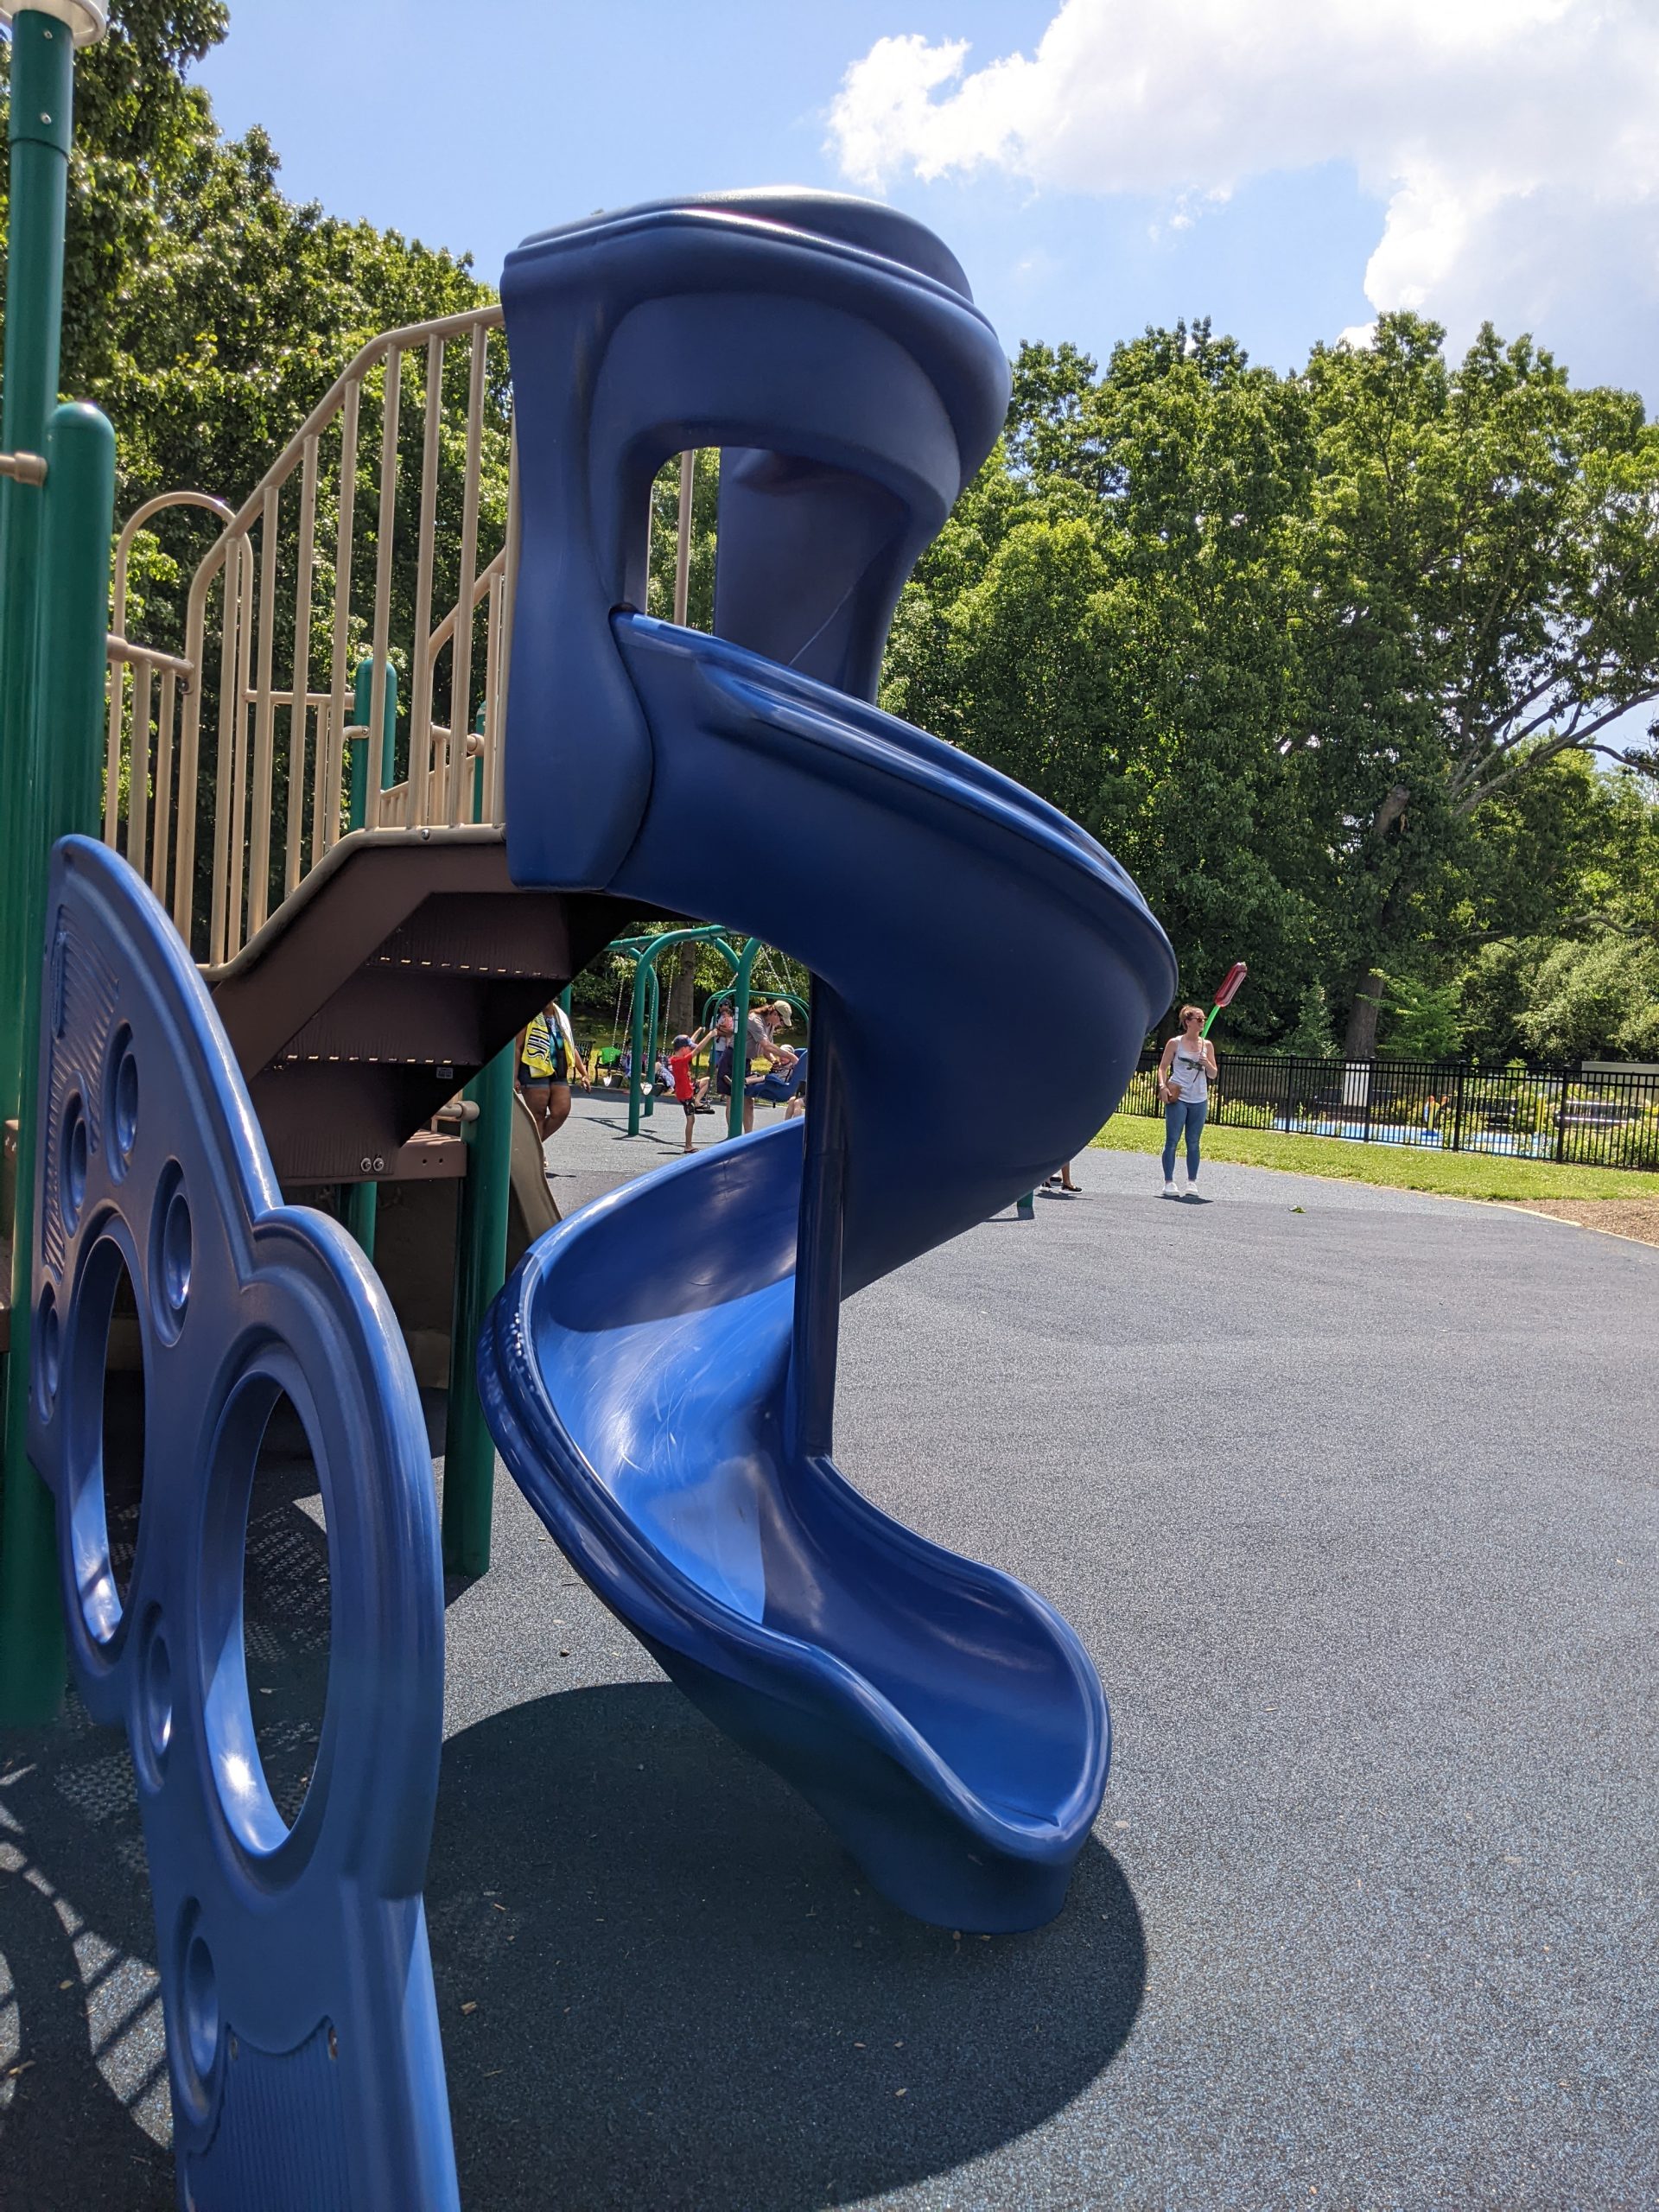 SLIDES AT Mercer County Park Playground in West Windsor Township NJ Large curvy slide